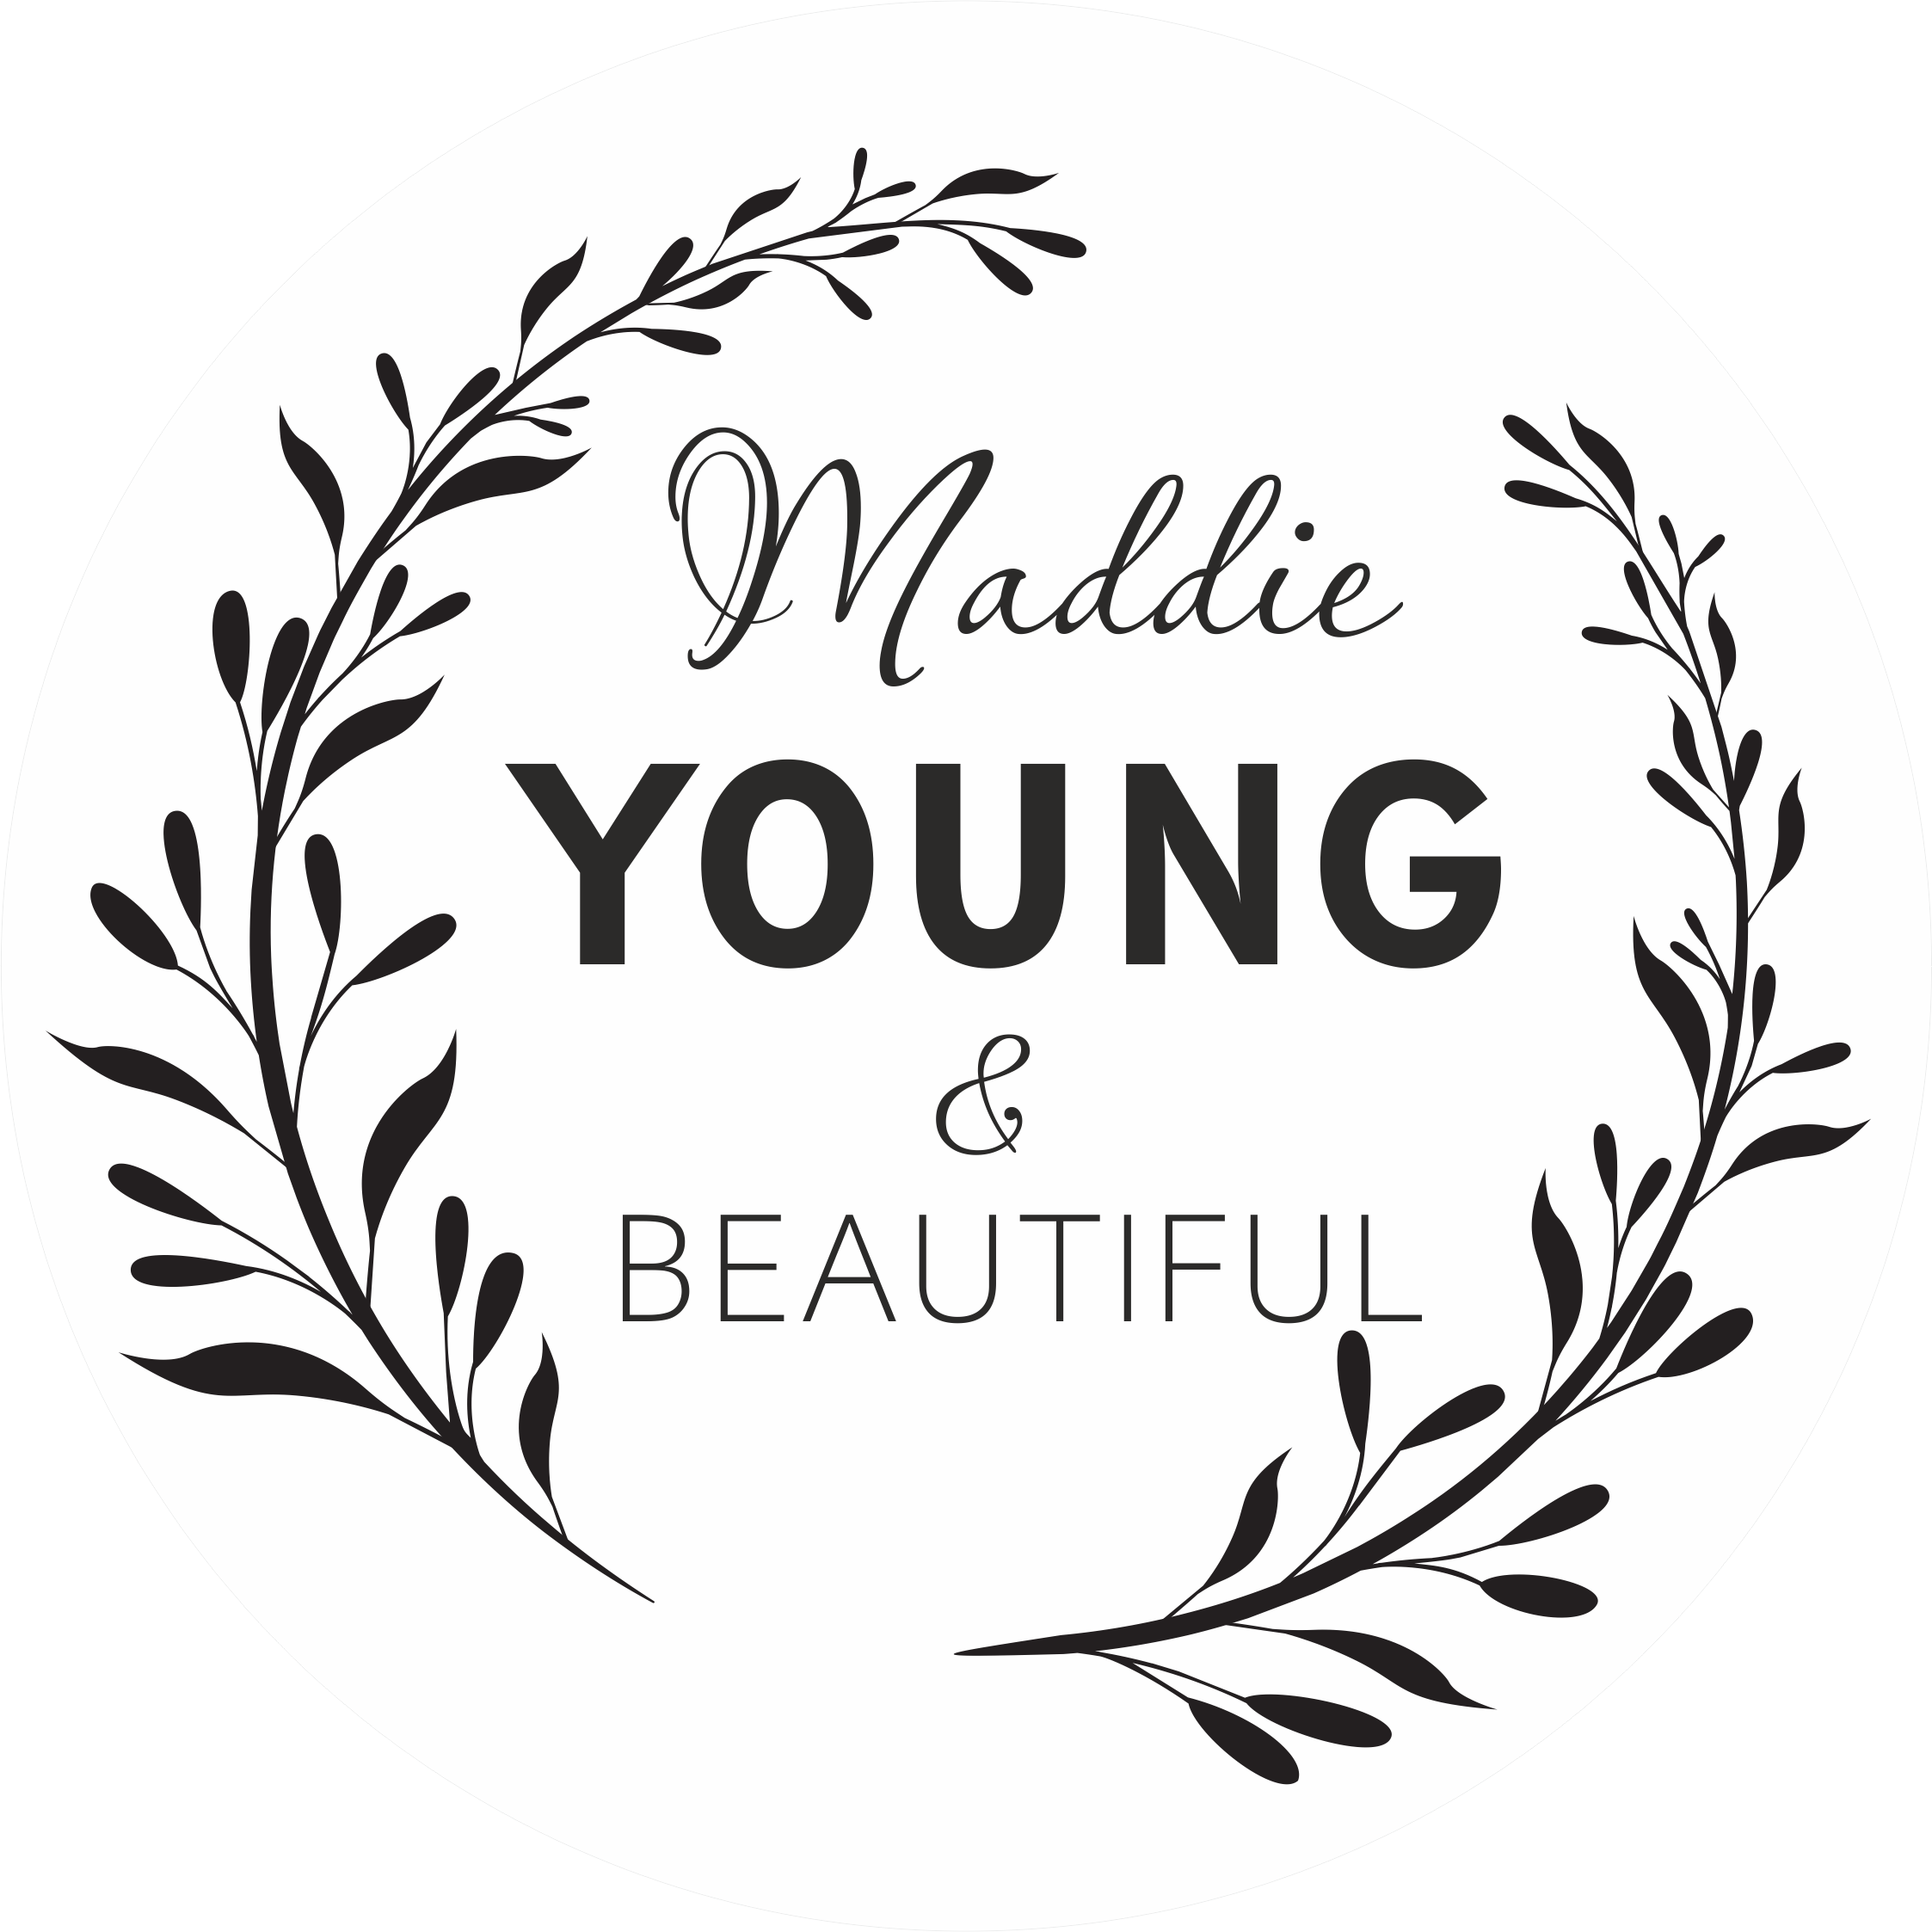 Maddie Young & Beautiful